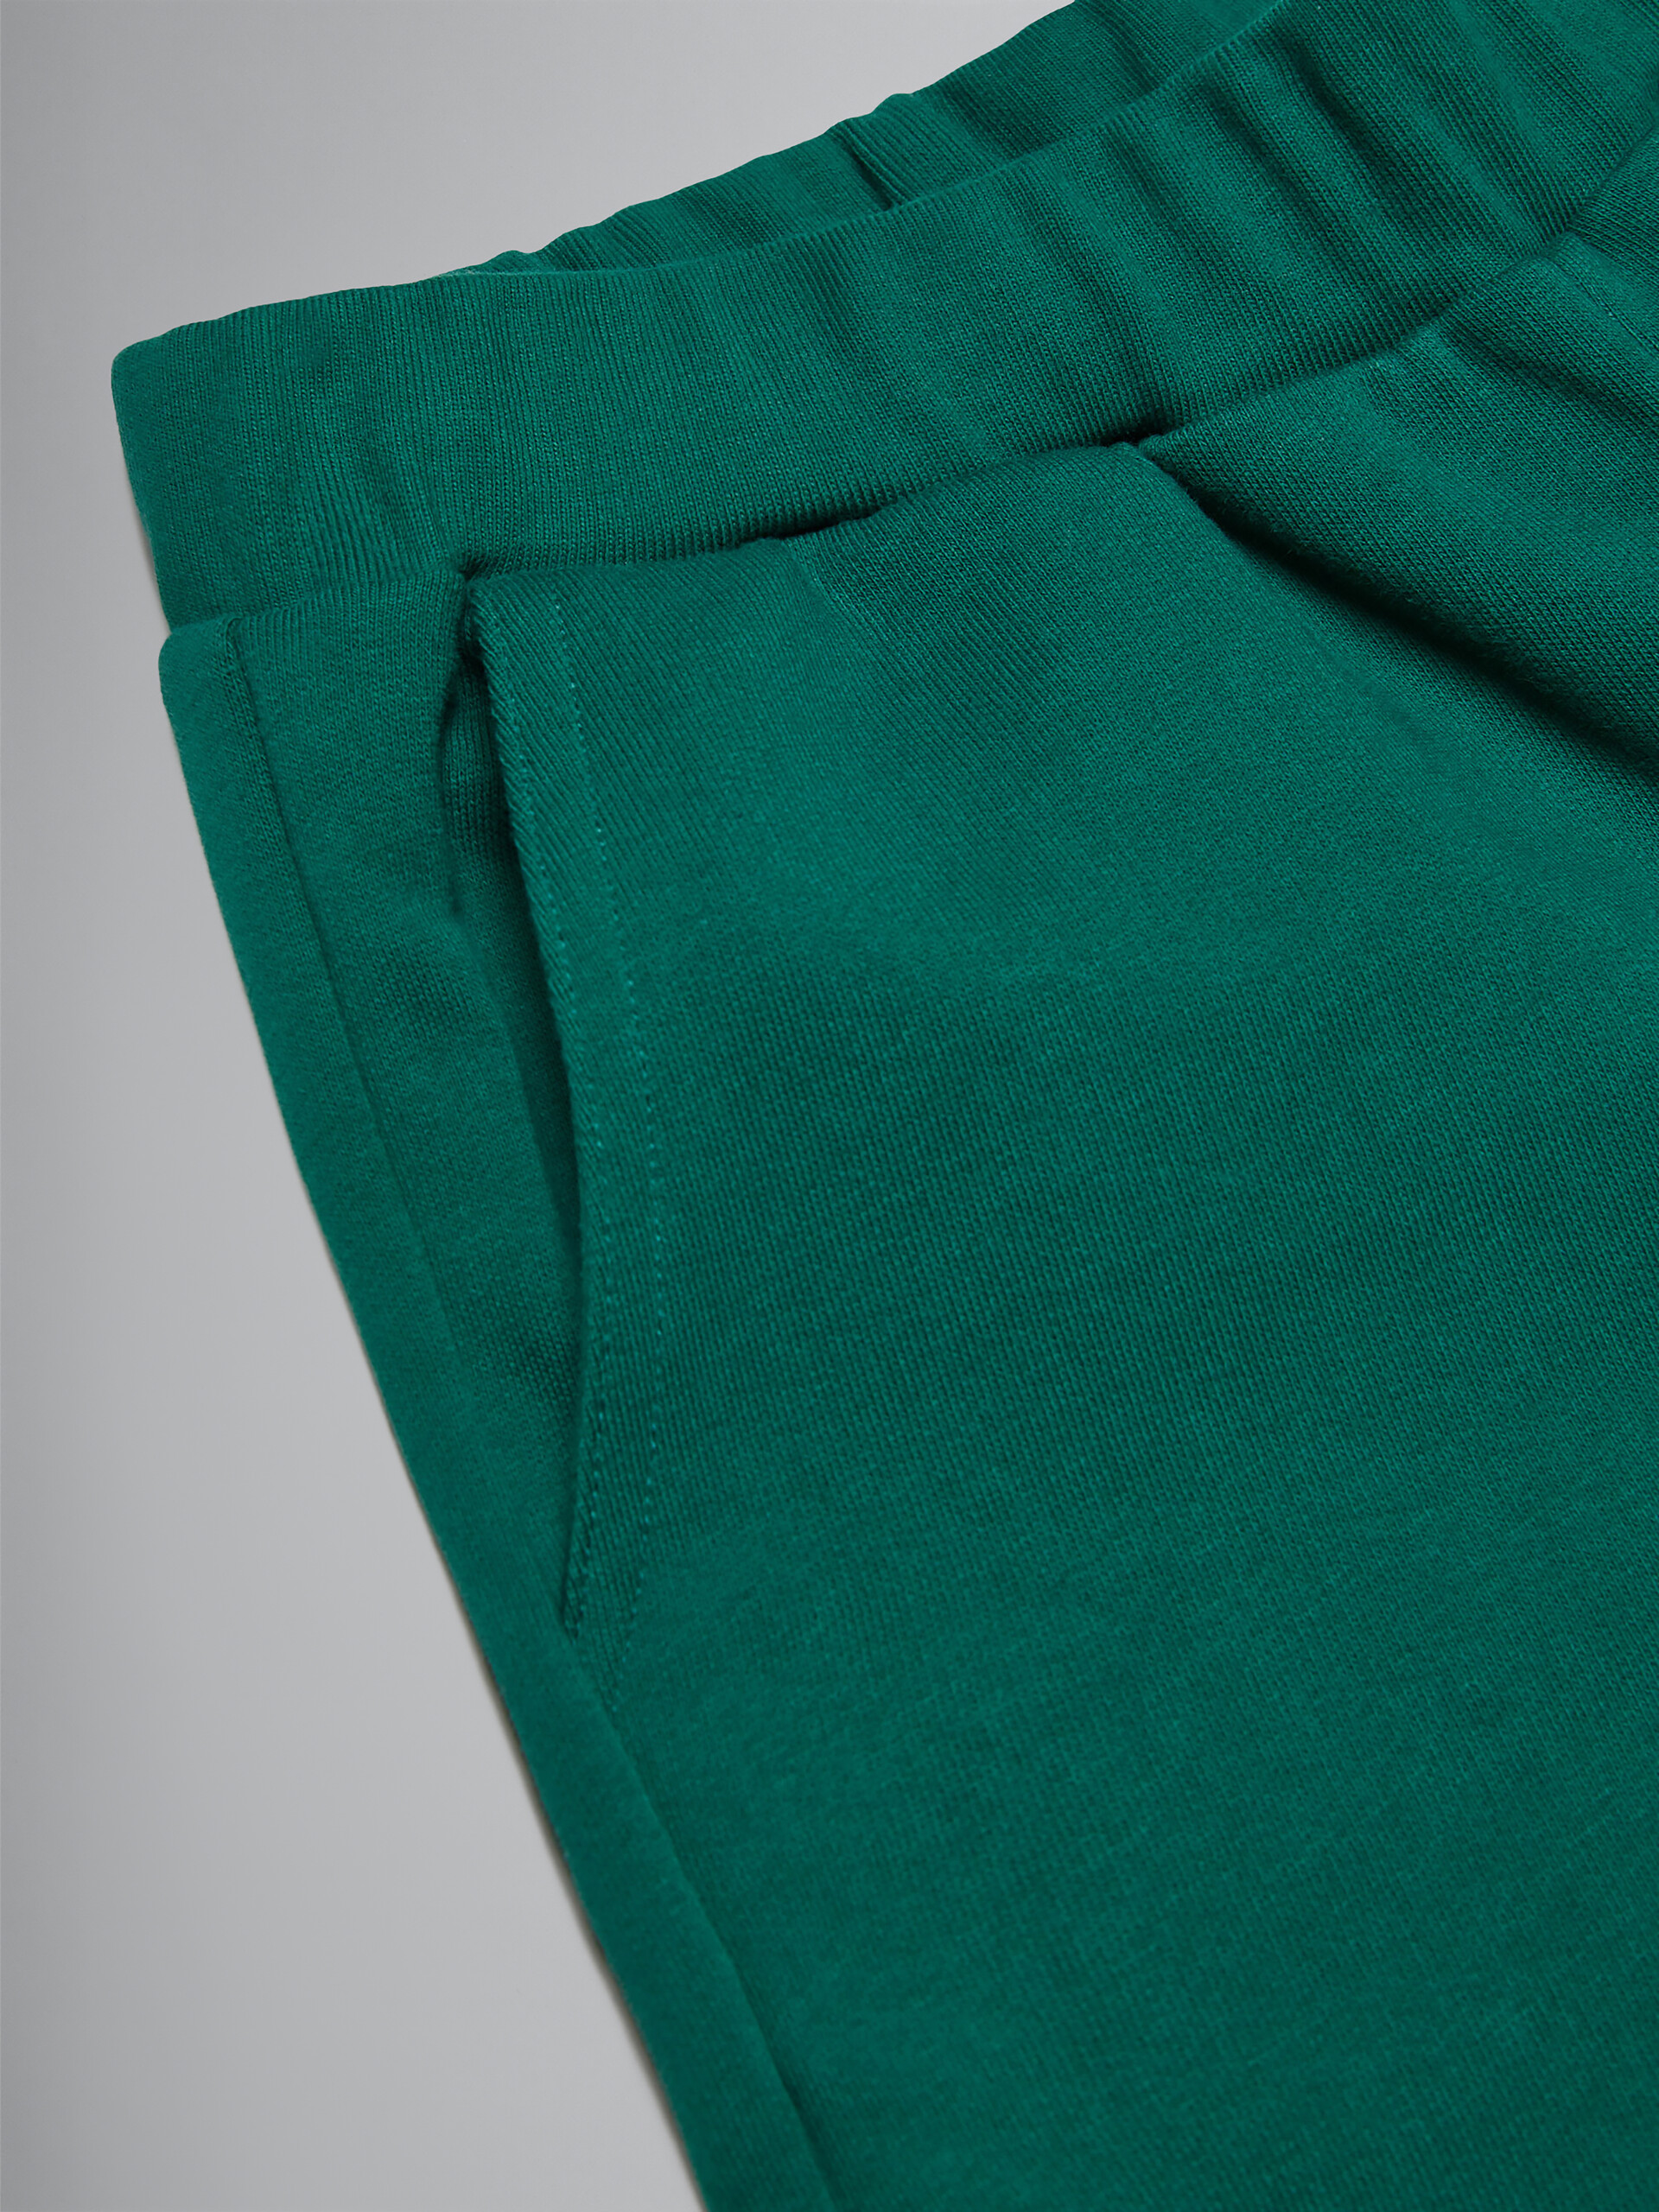 Shorts verdi in felpa con logo - Pantaloni - Image 3